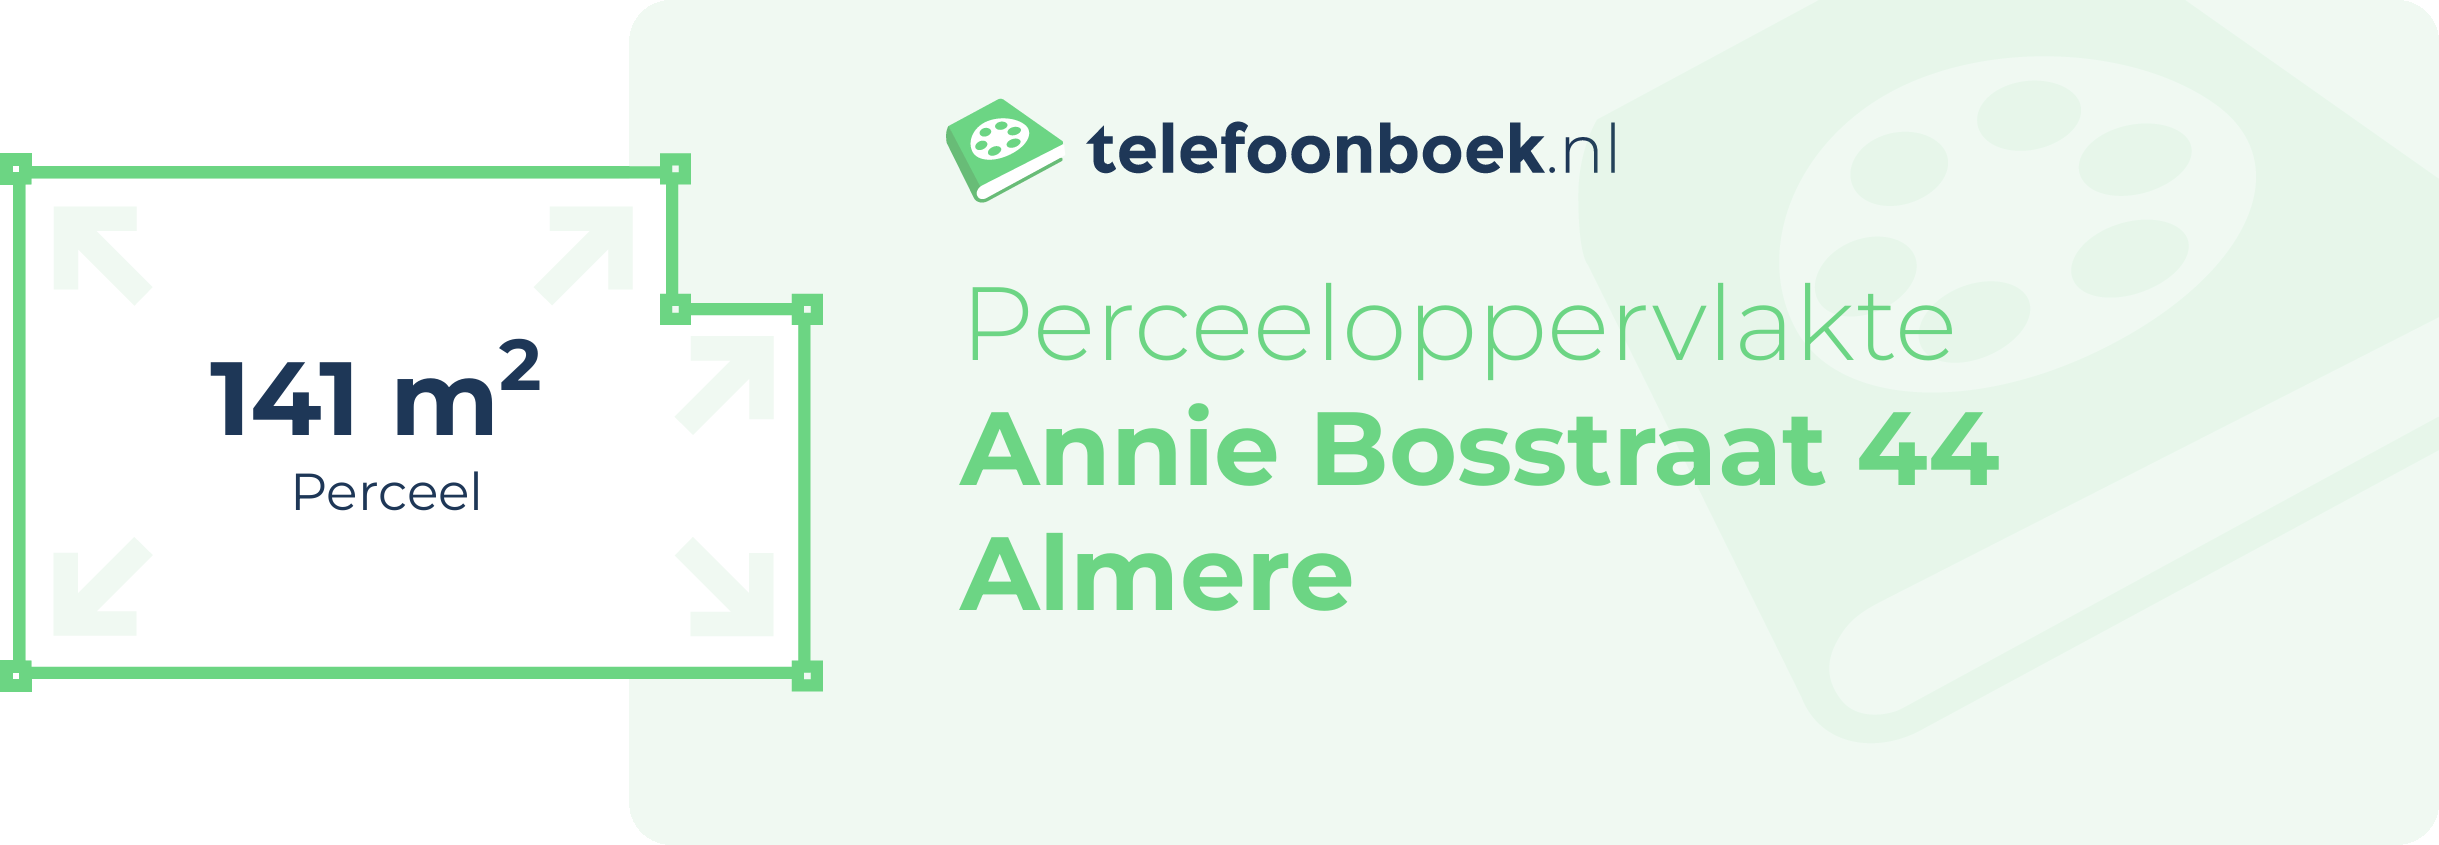 Perceeloppervlakte Annie Bosstraat 44 Almere